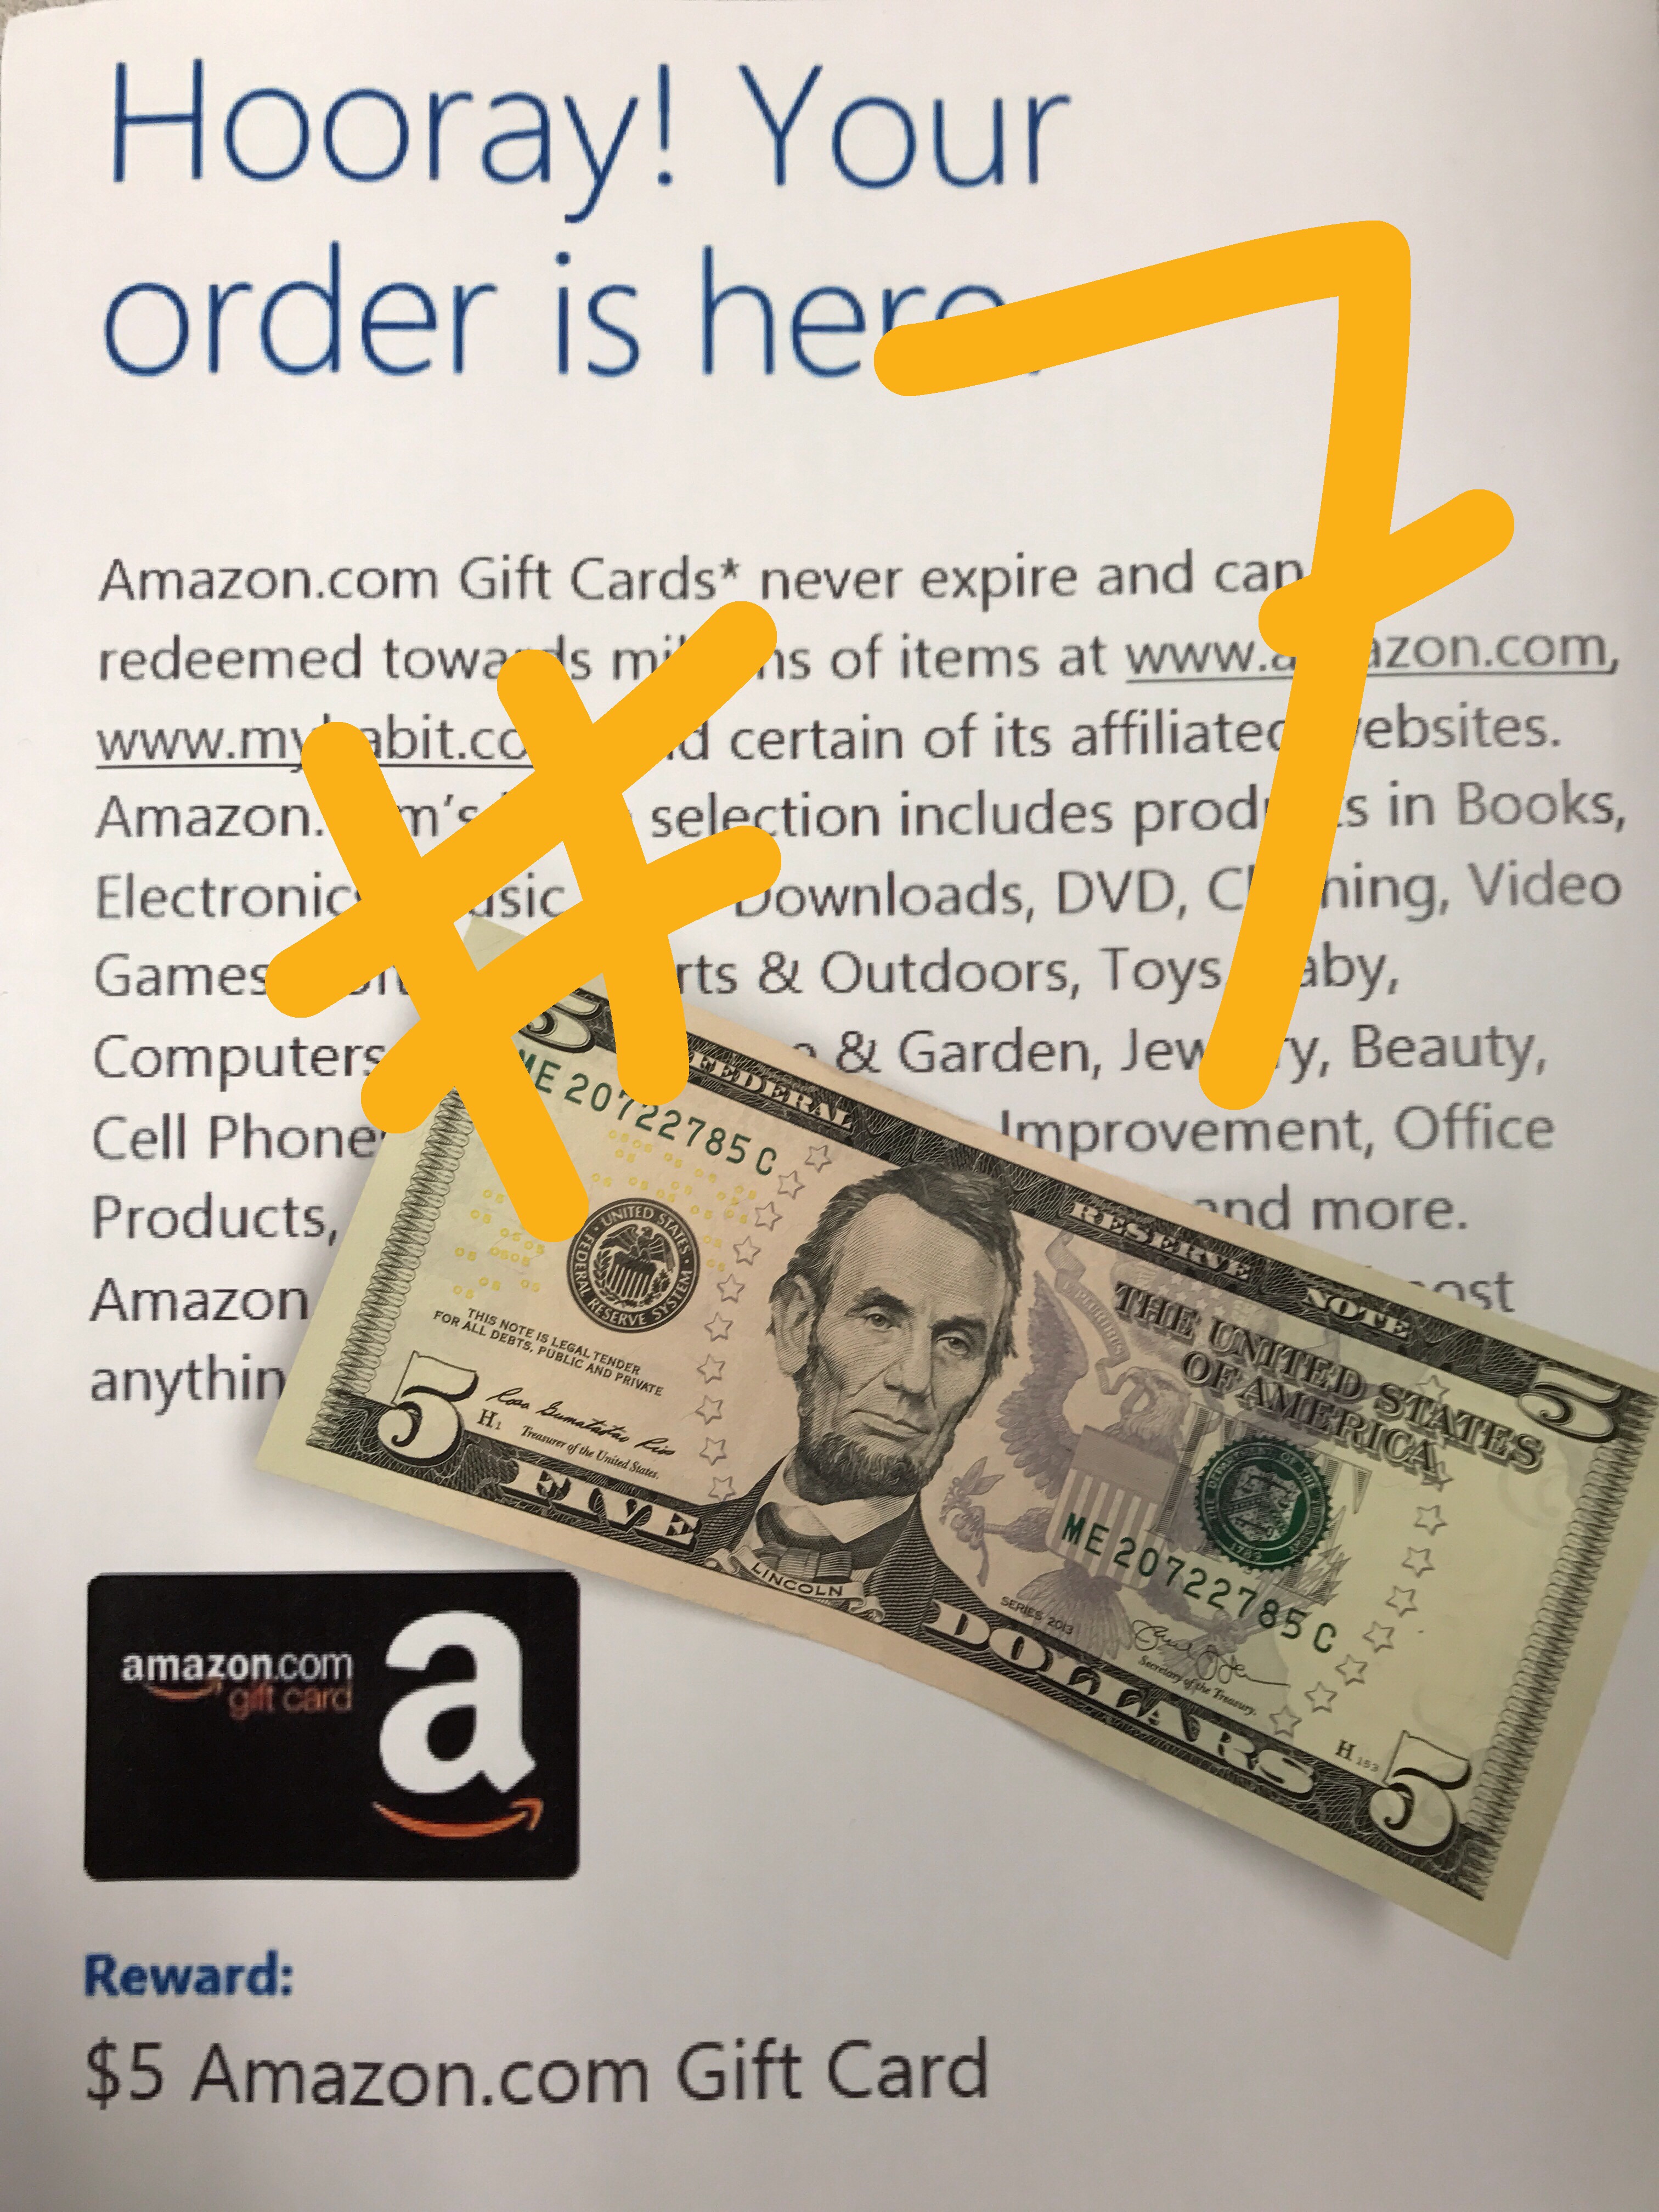 Microsoft Reward Amazon Gift Card